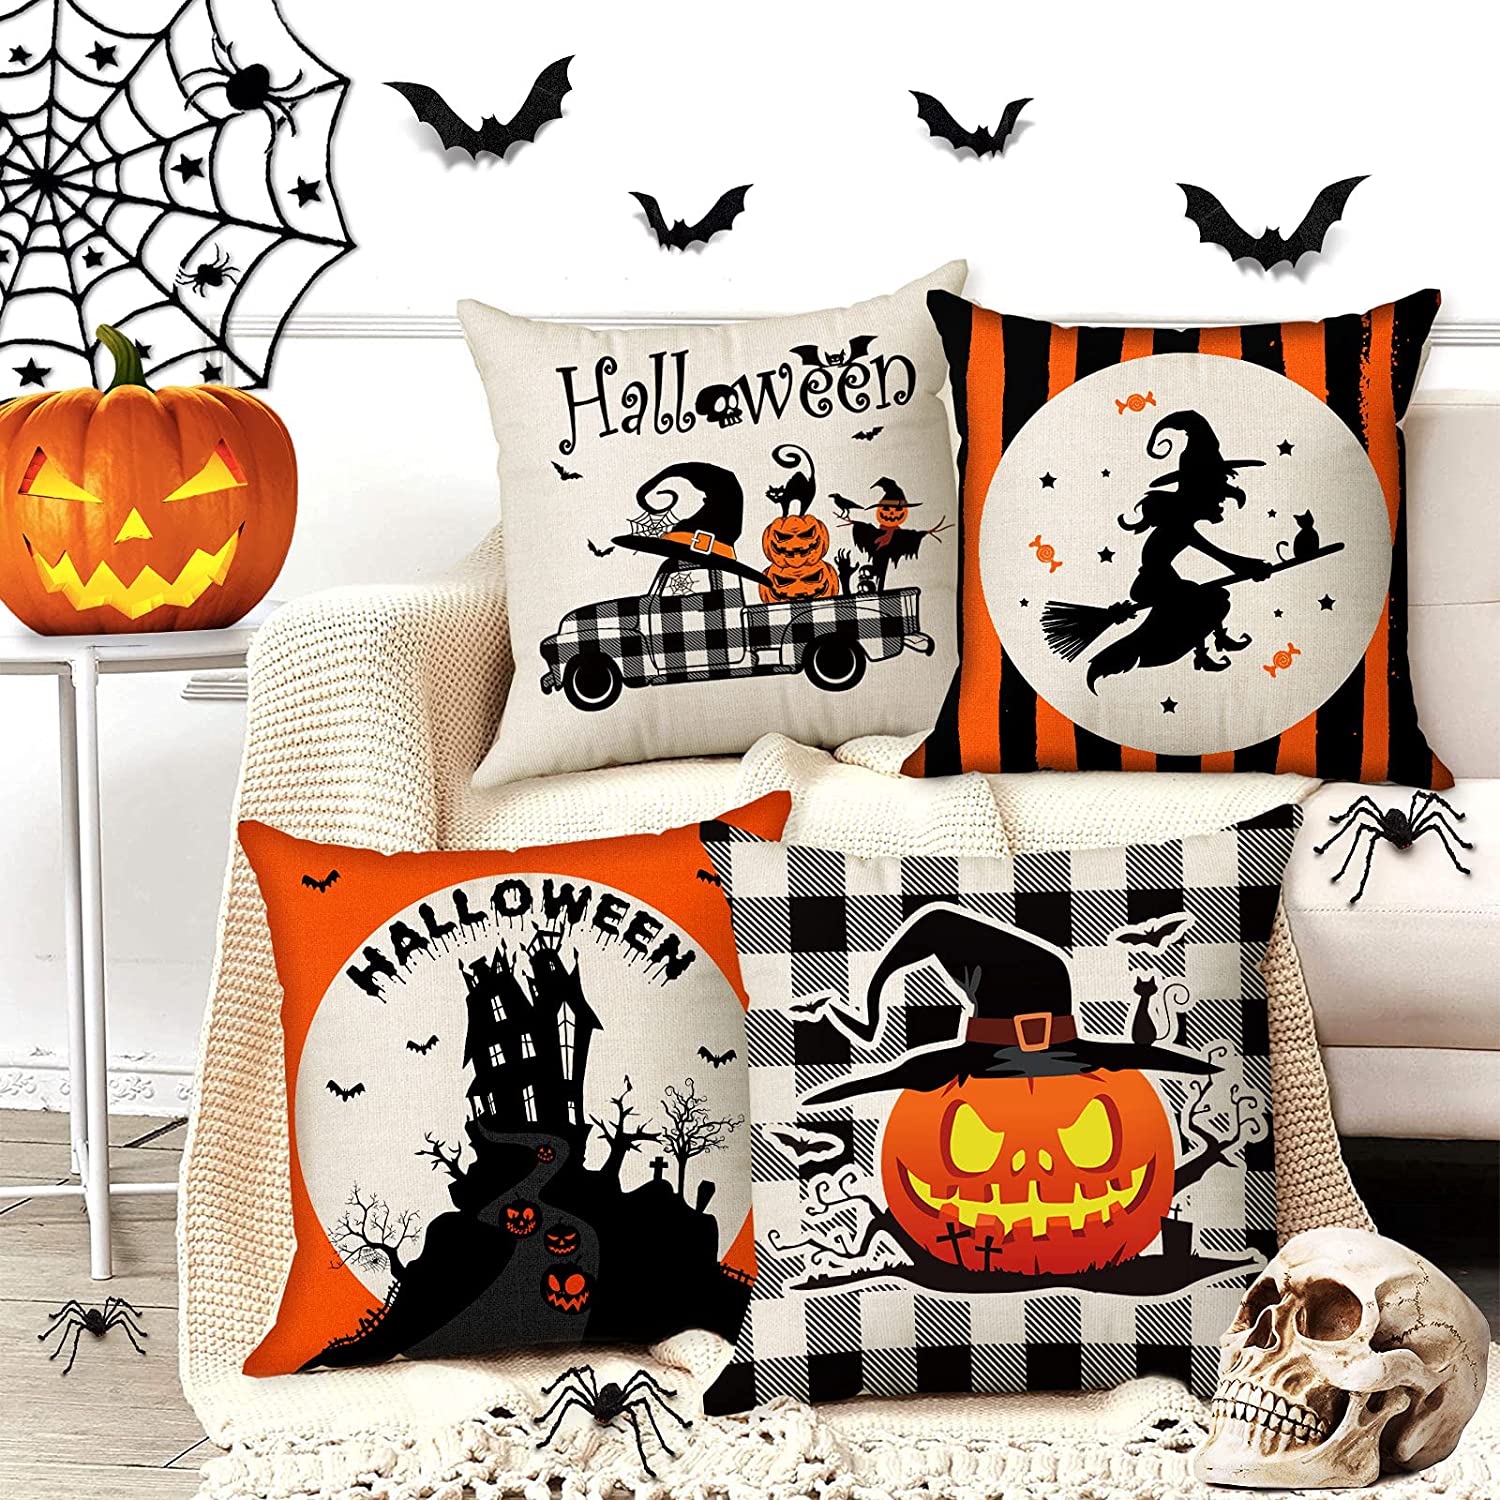  Fukeen Happy Halloween Pillow Covers 18x18 Inch Set of